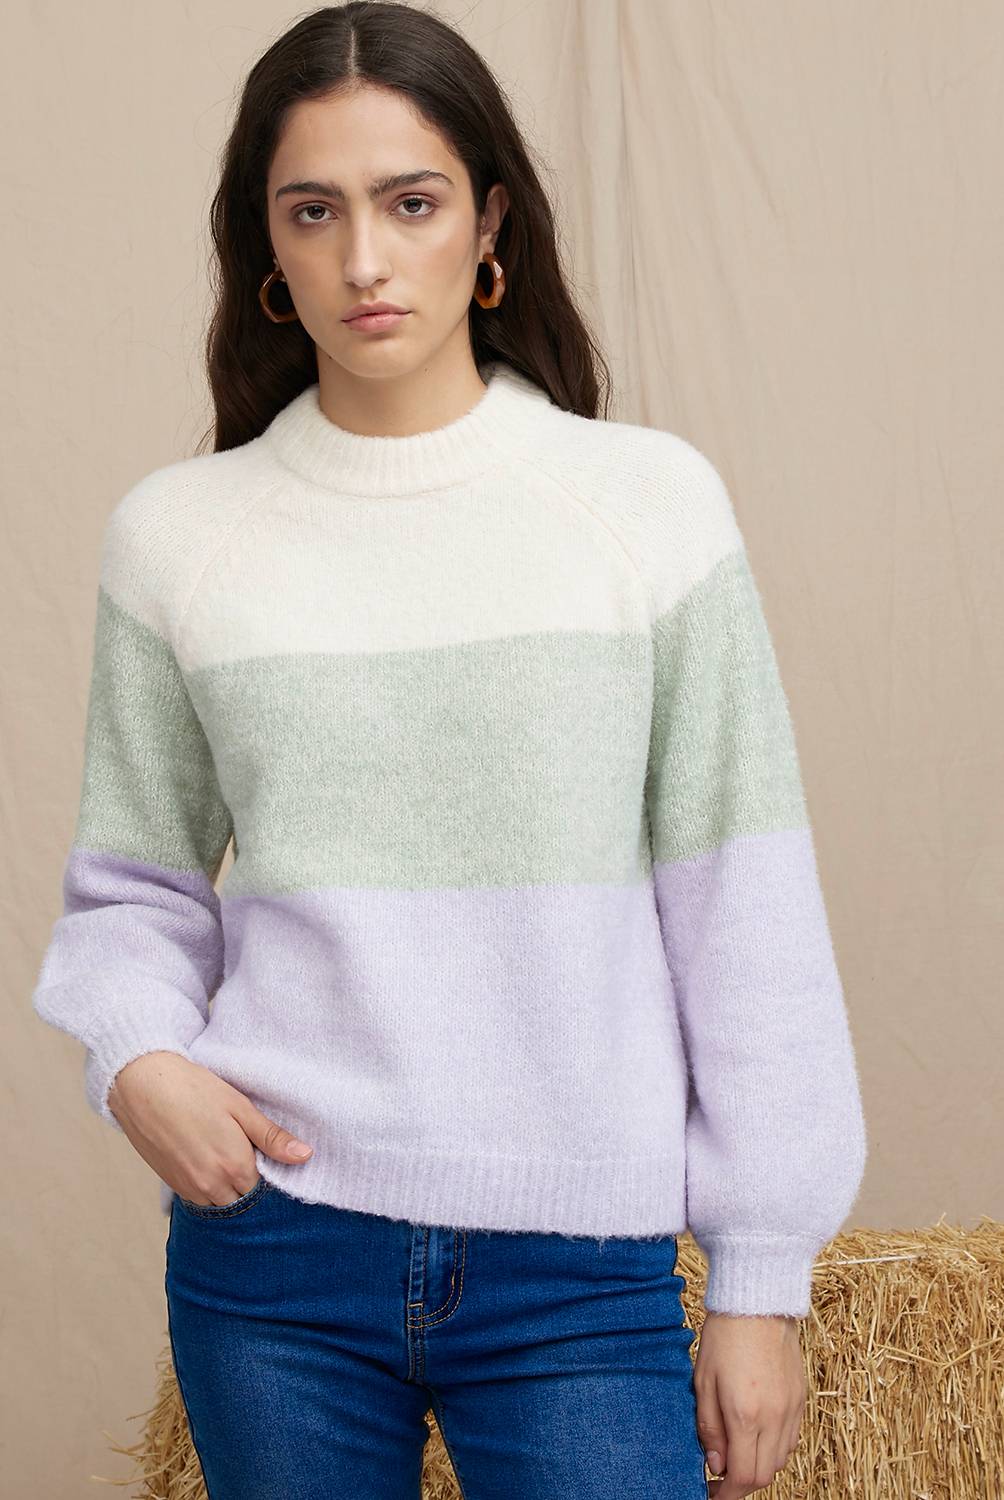 UNIVERSITY CLUB - University Club Sweater Mujer